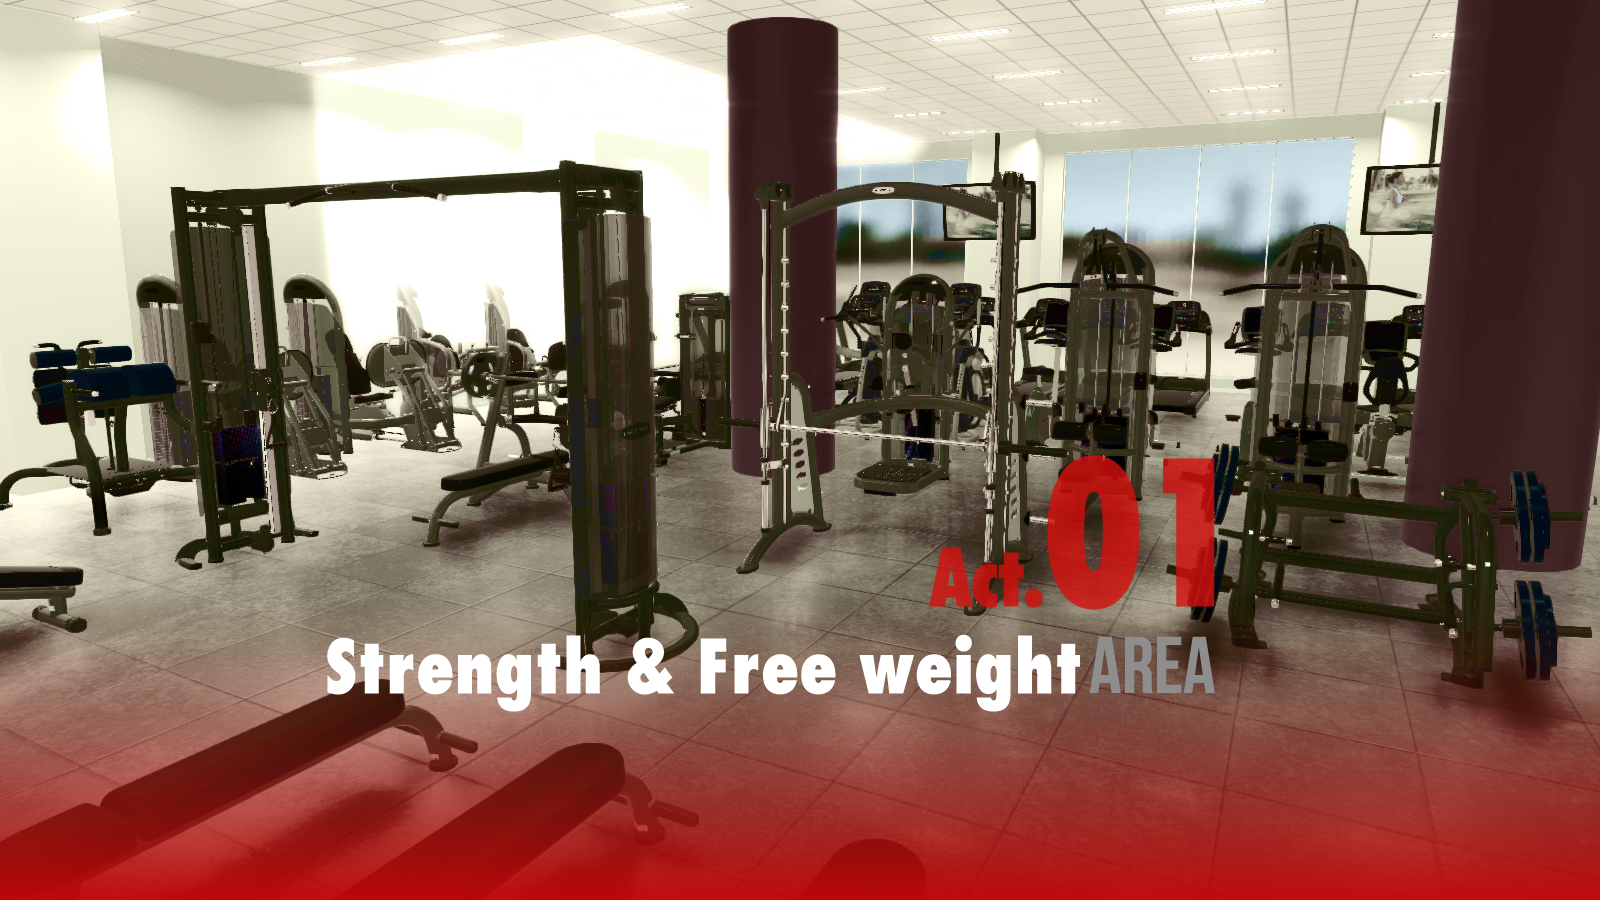 Strebgth & Free weight Area